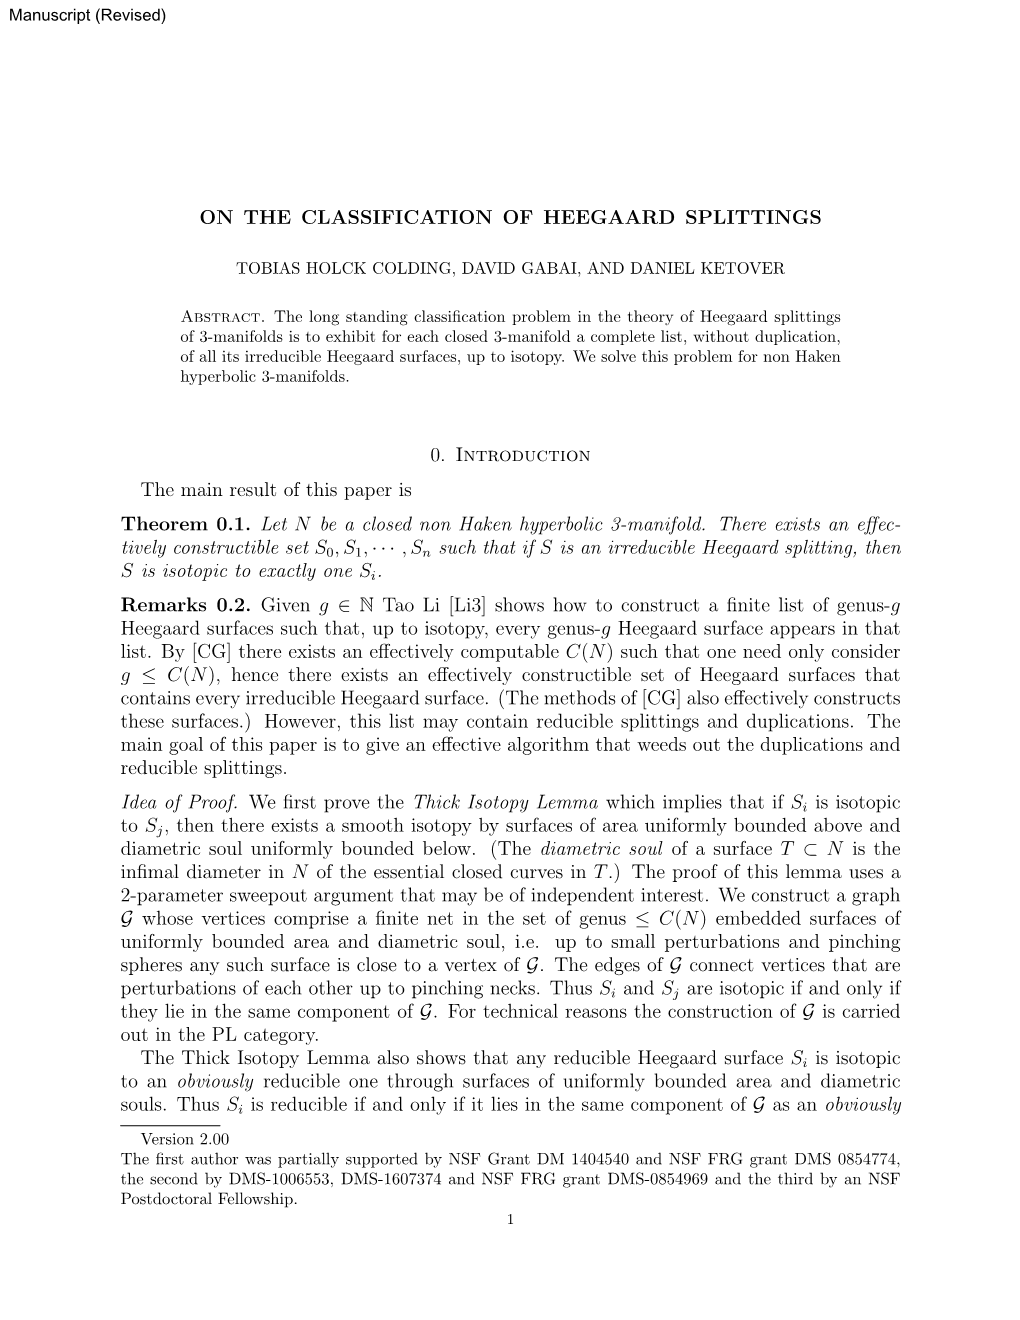 On the Classification of Heegaard Splittings